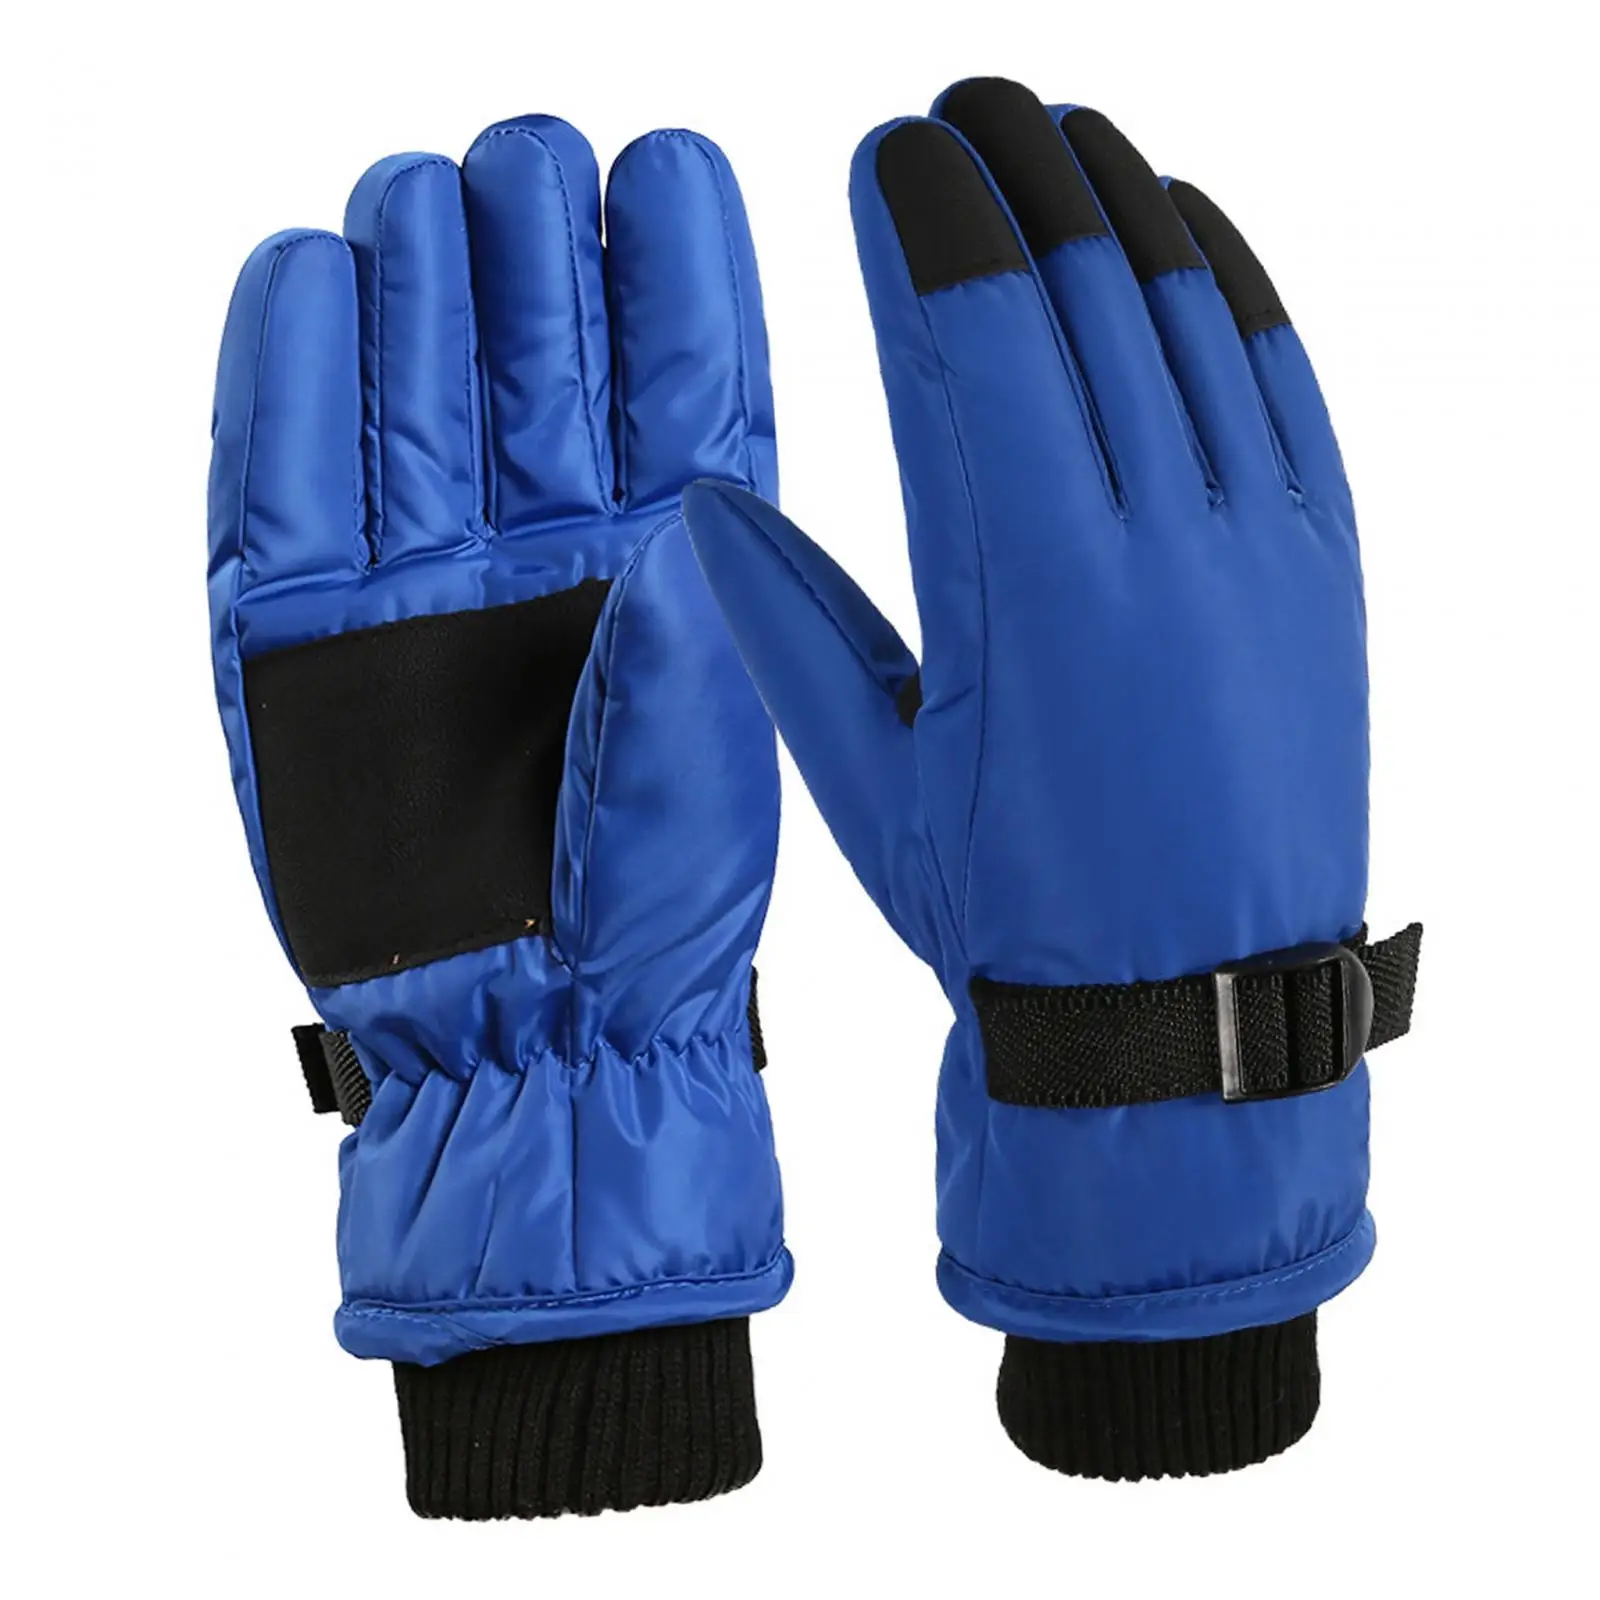 Kids Winter Gloves Ski Gloves Mittens Waterproof Gloves for Cold Weather for Girls Boys Snowboarding Hiking Skateboarding